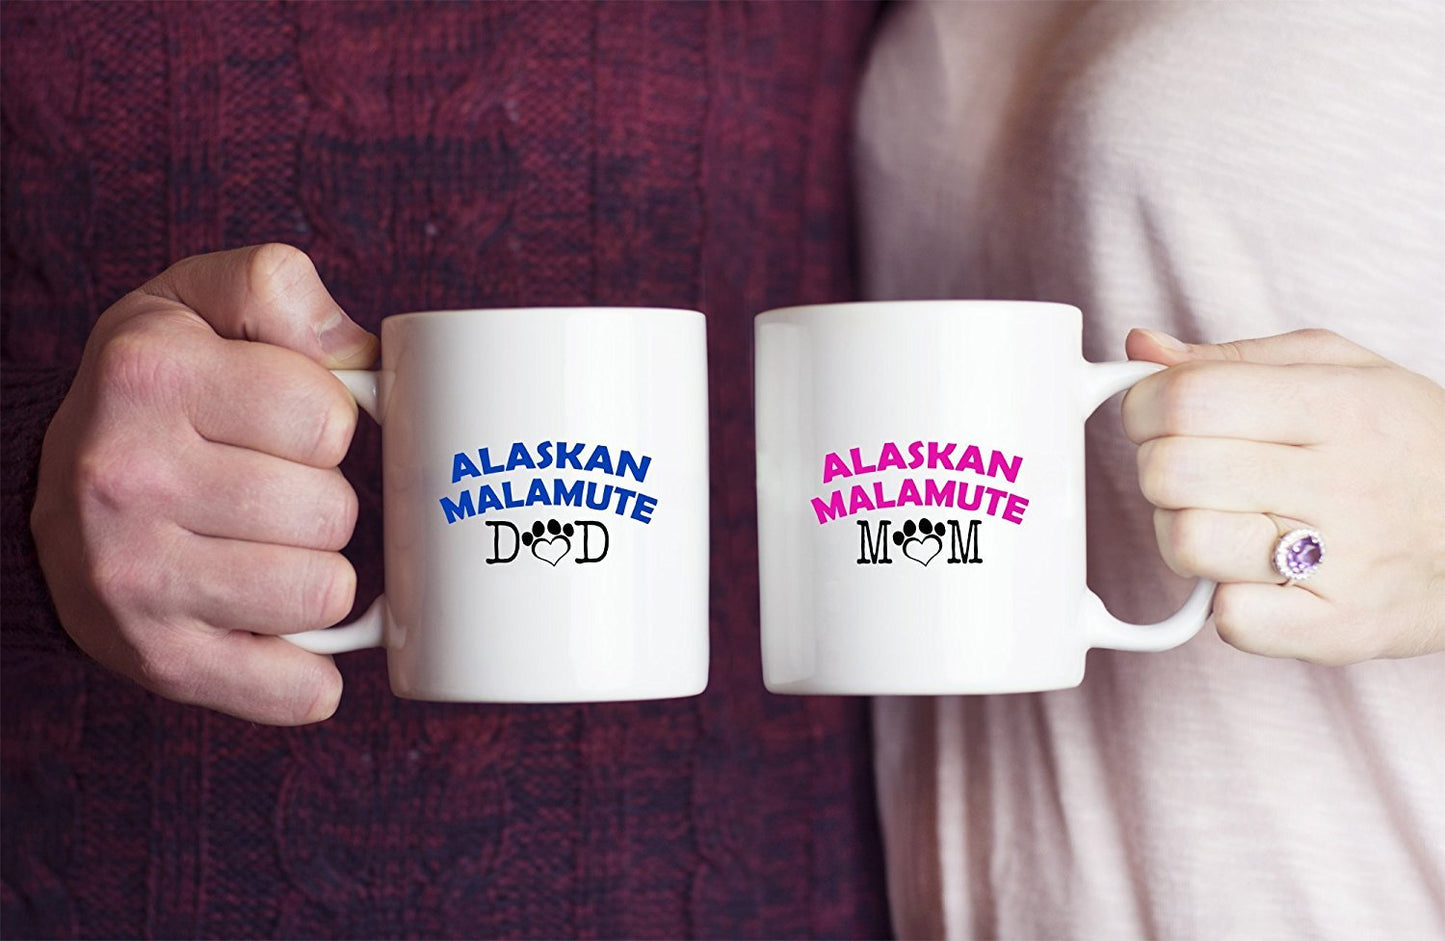 Funny Alaskan Malamute Couple Mug - Alaskan Malamute Dad - Alaskan Malamute Mom - Alaskan Malamute Lover Gifts - Unique Ceramic Gifts Idea (Dad)